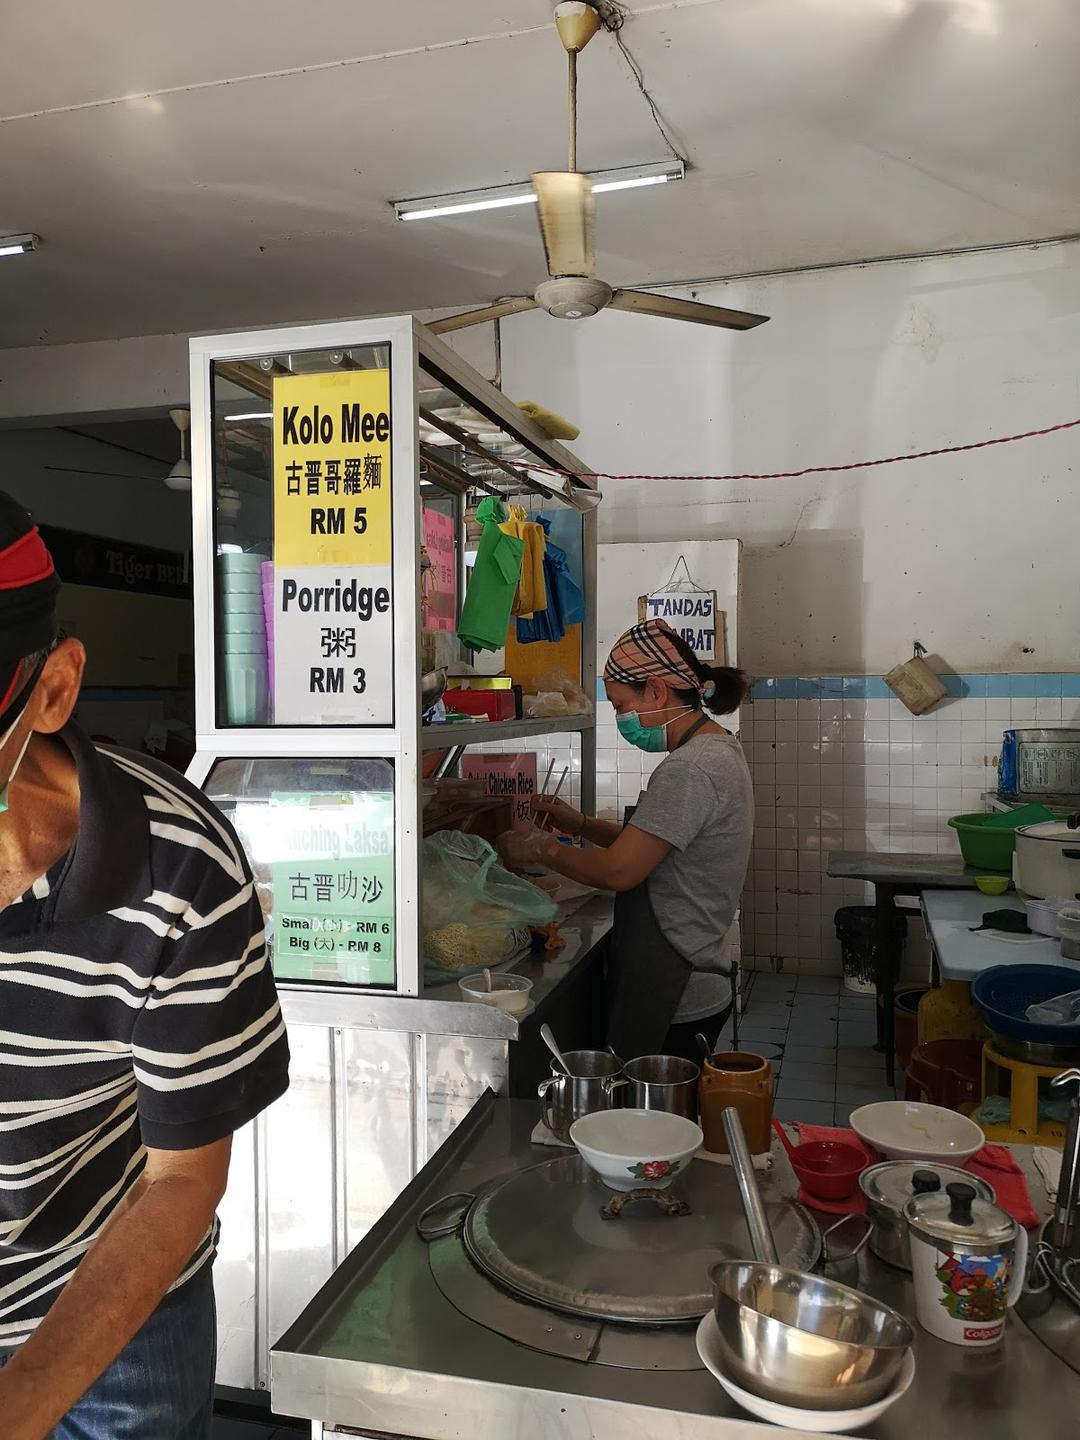 Photo of Kedai kopi Yu Yee - Kota Kinabalu, Sabah, Malaysia